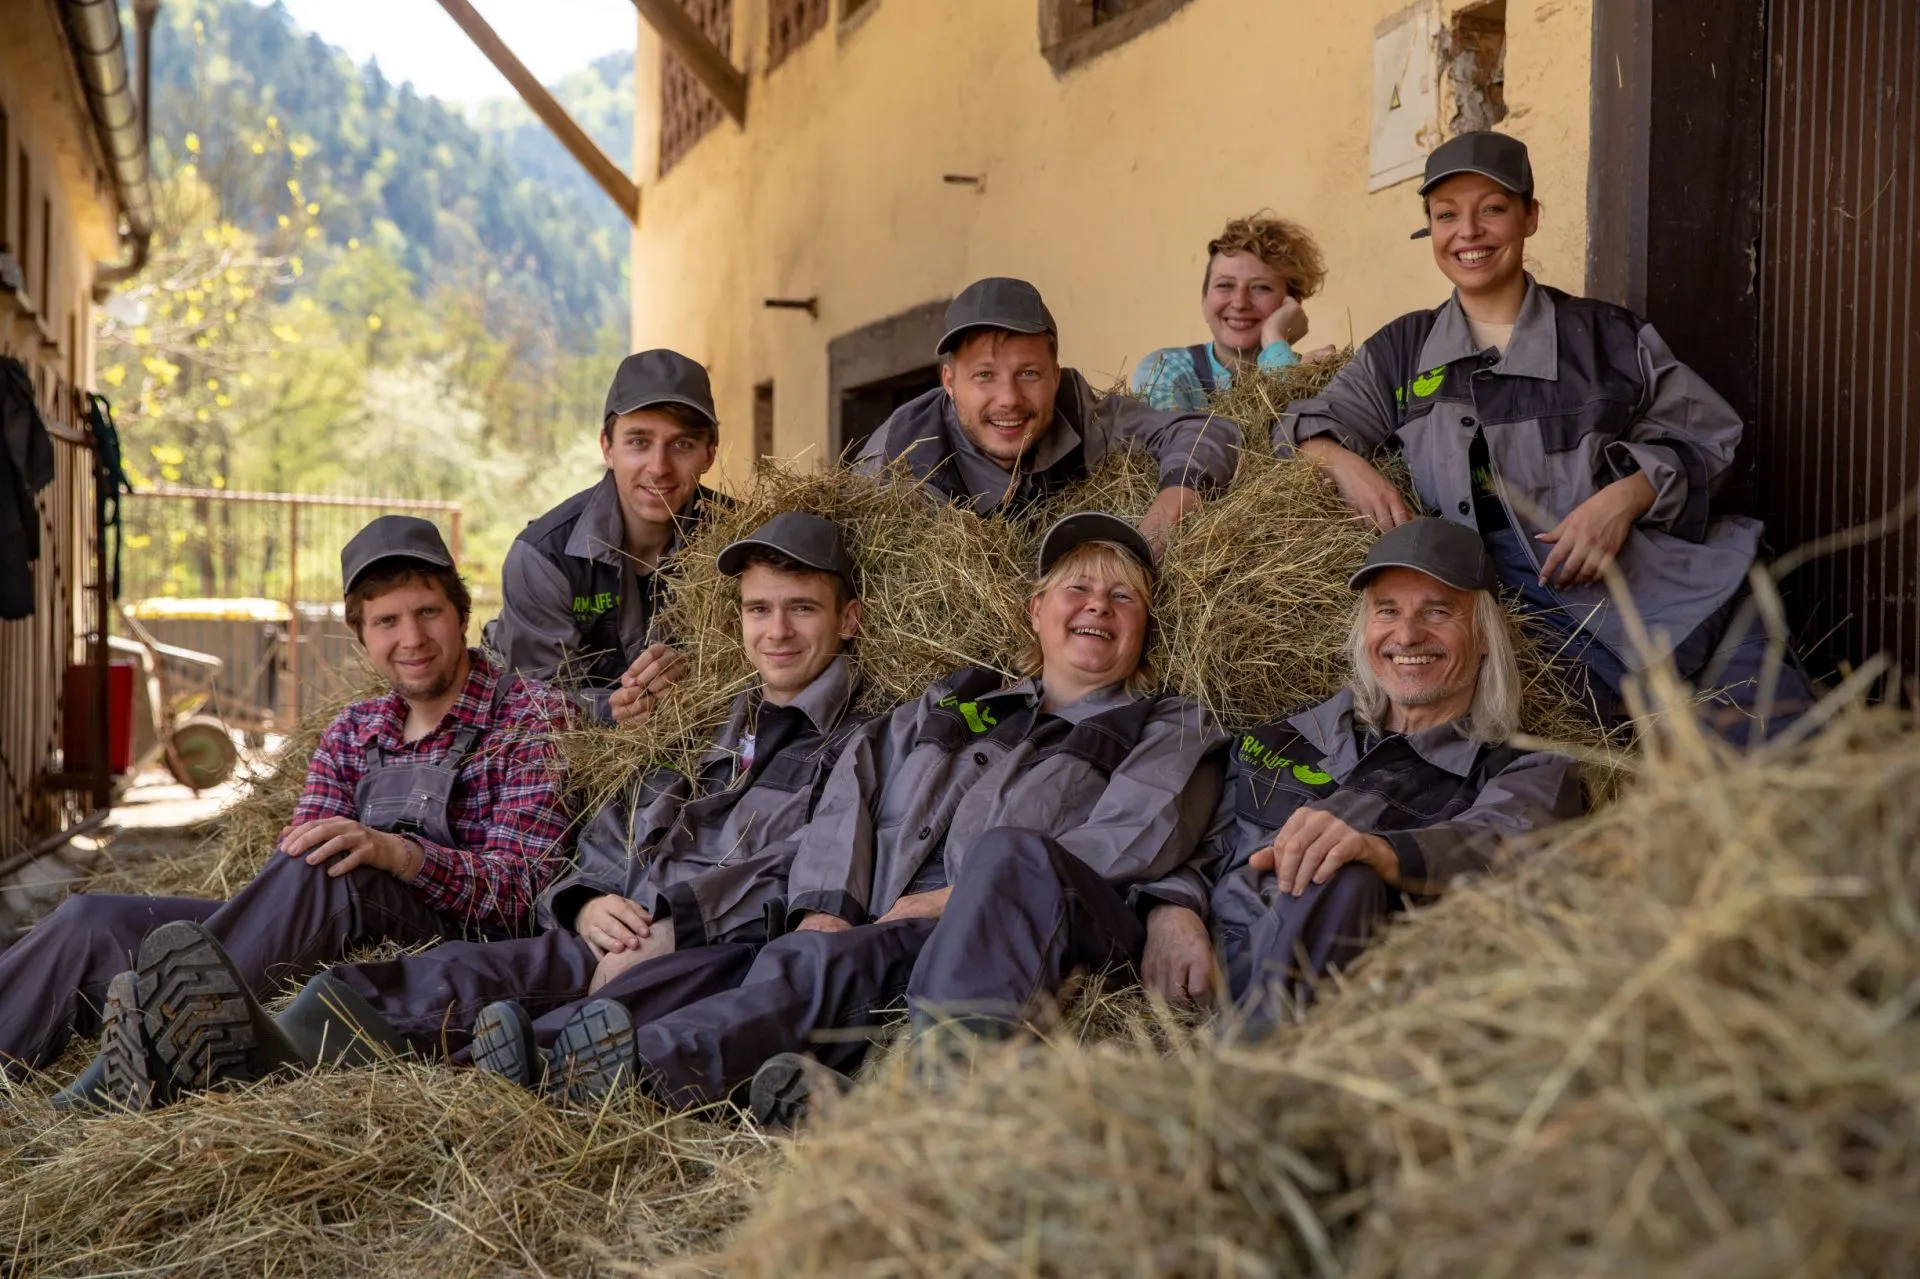 best farm experience in slovenia